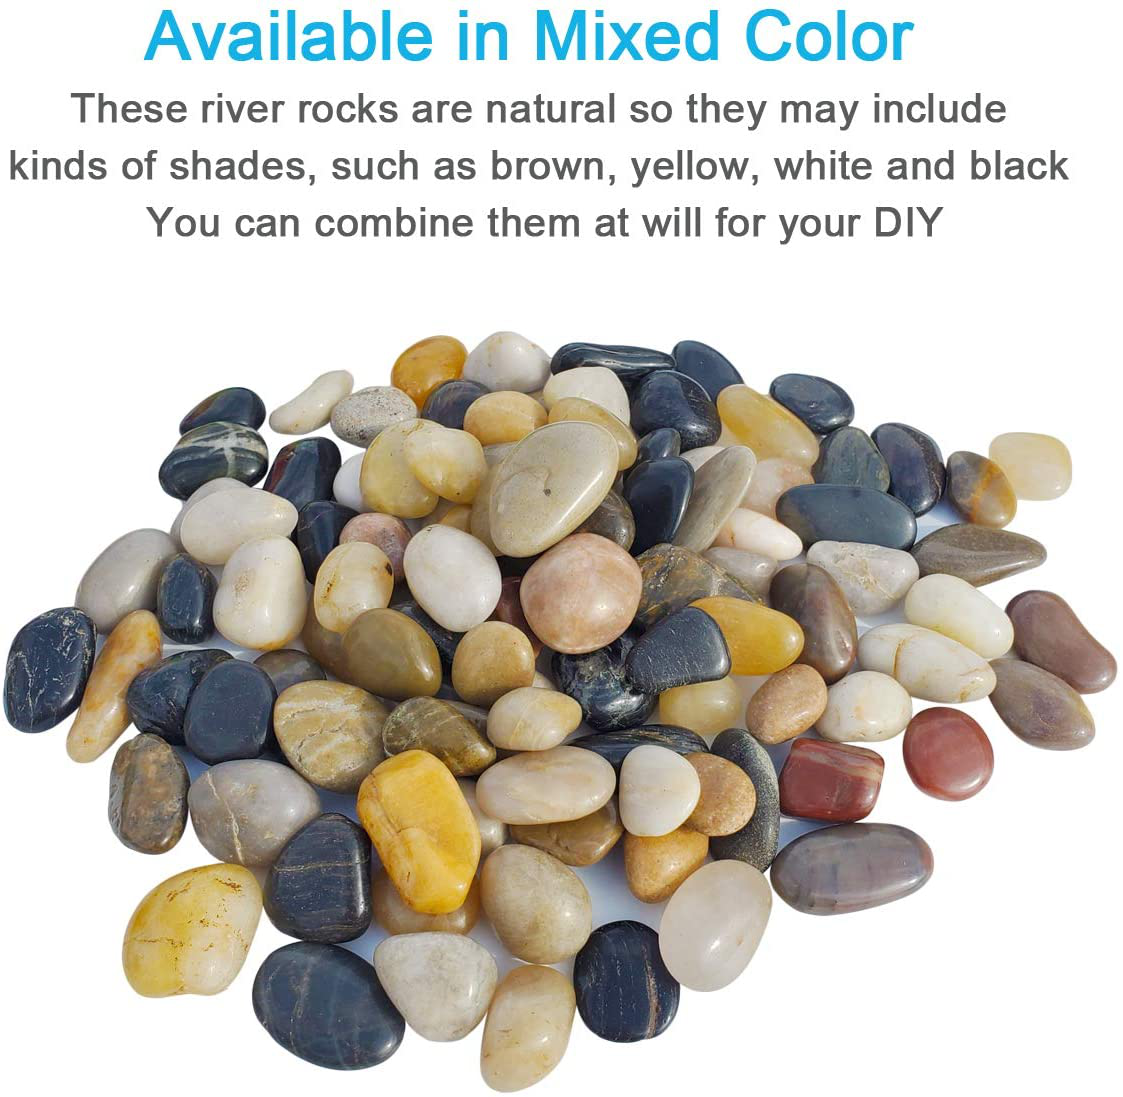 Gravel Pebbles, Mix Colored Stones, Plants Decor, Fish Tank Rocks